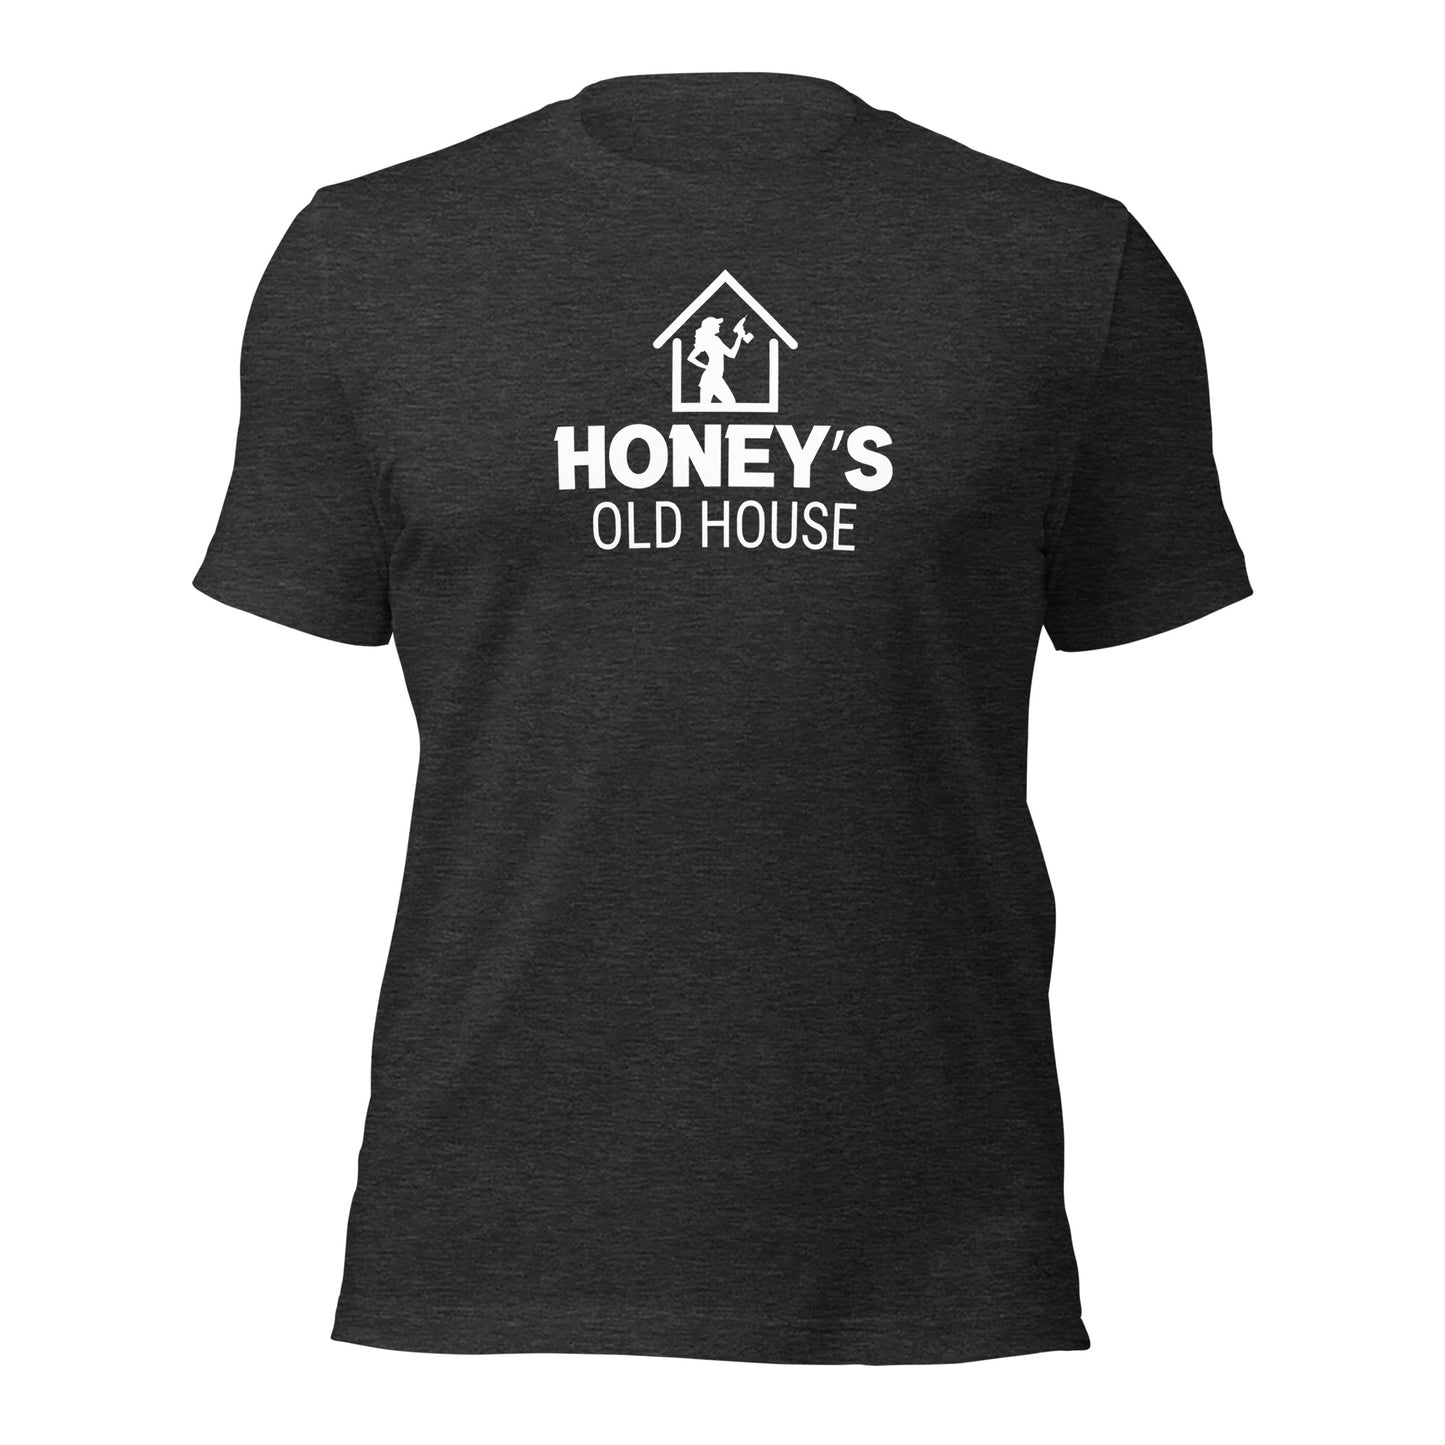 Honey's Old House t-shirt